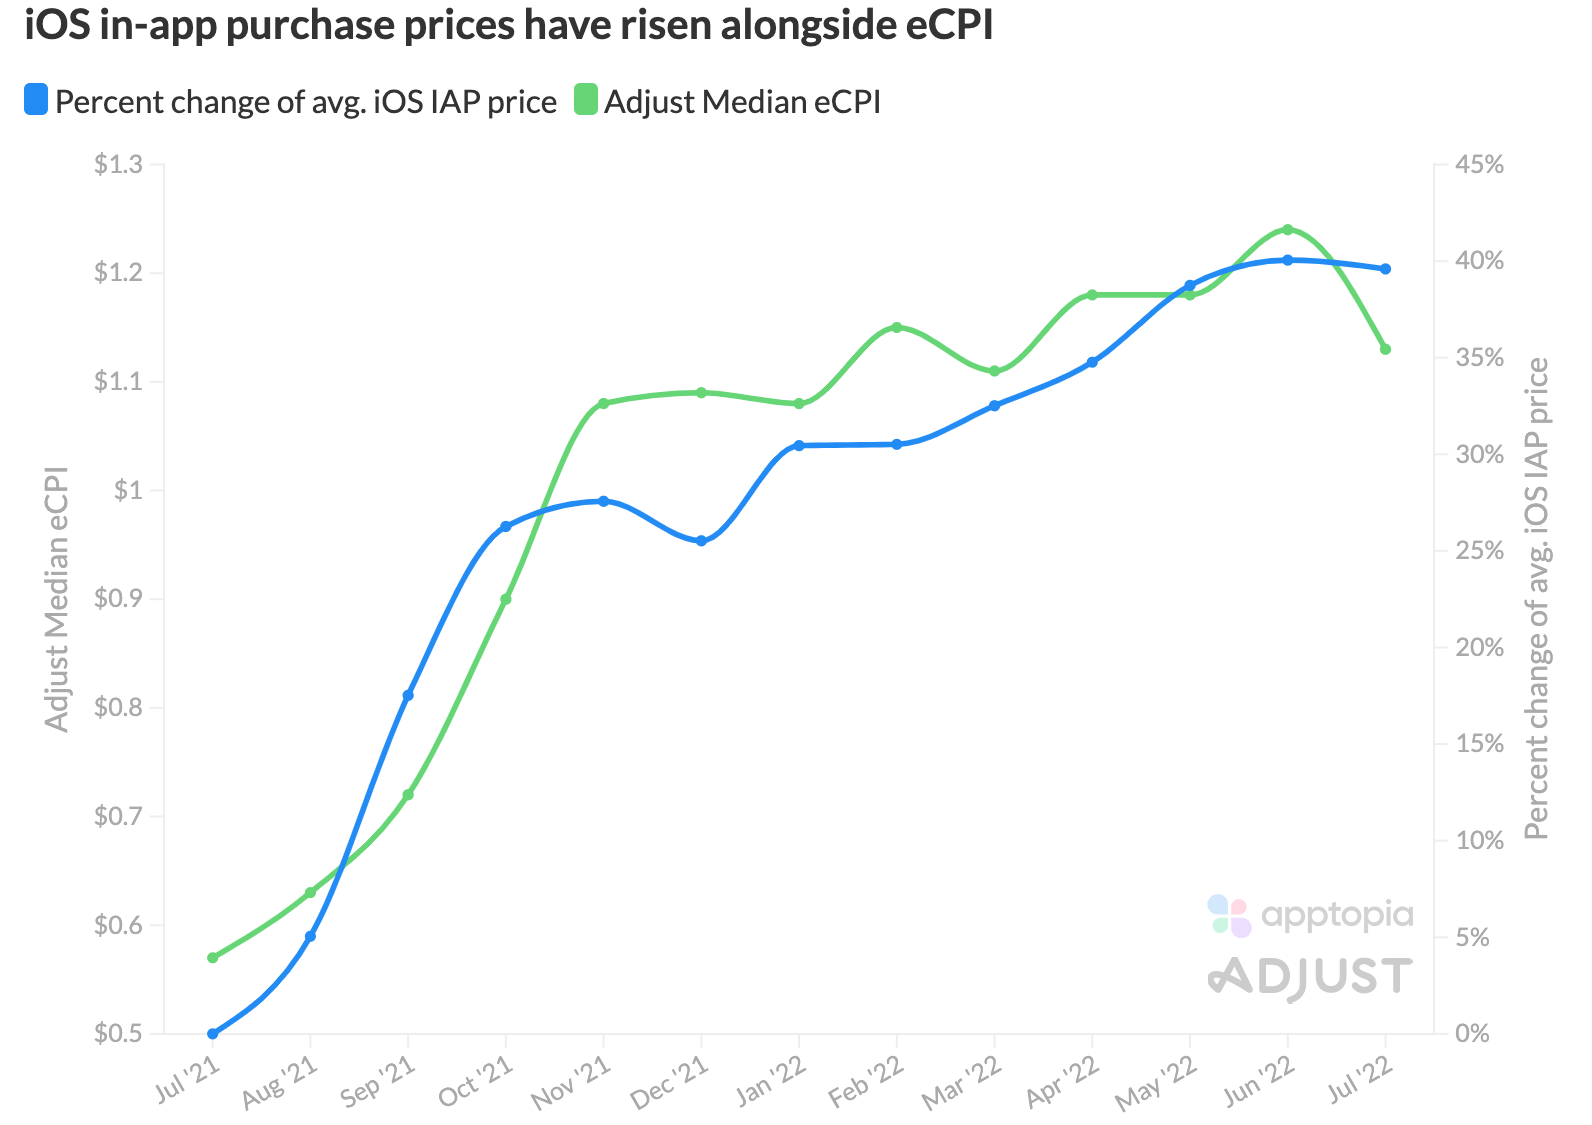 IAP price increase with ecpi